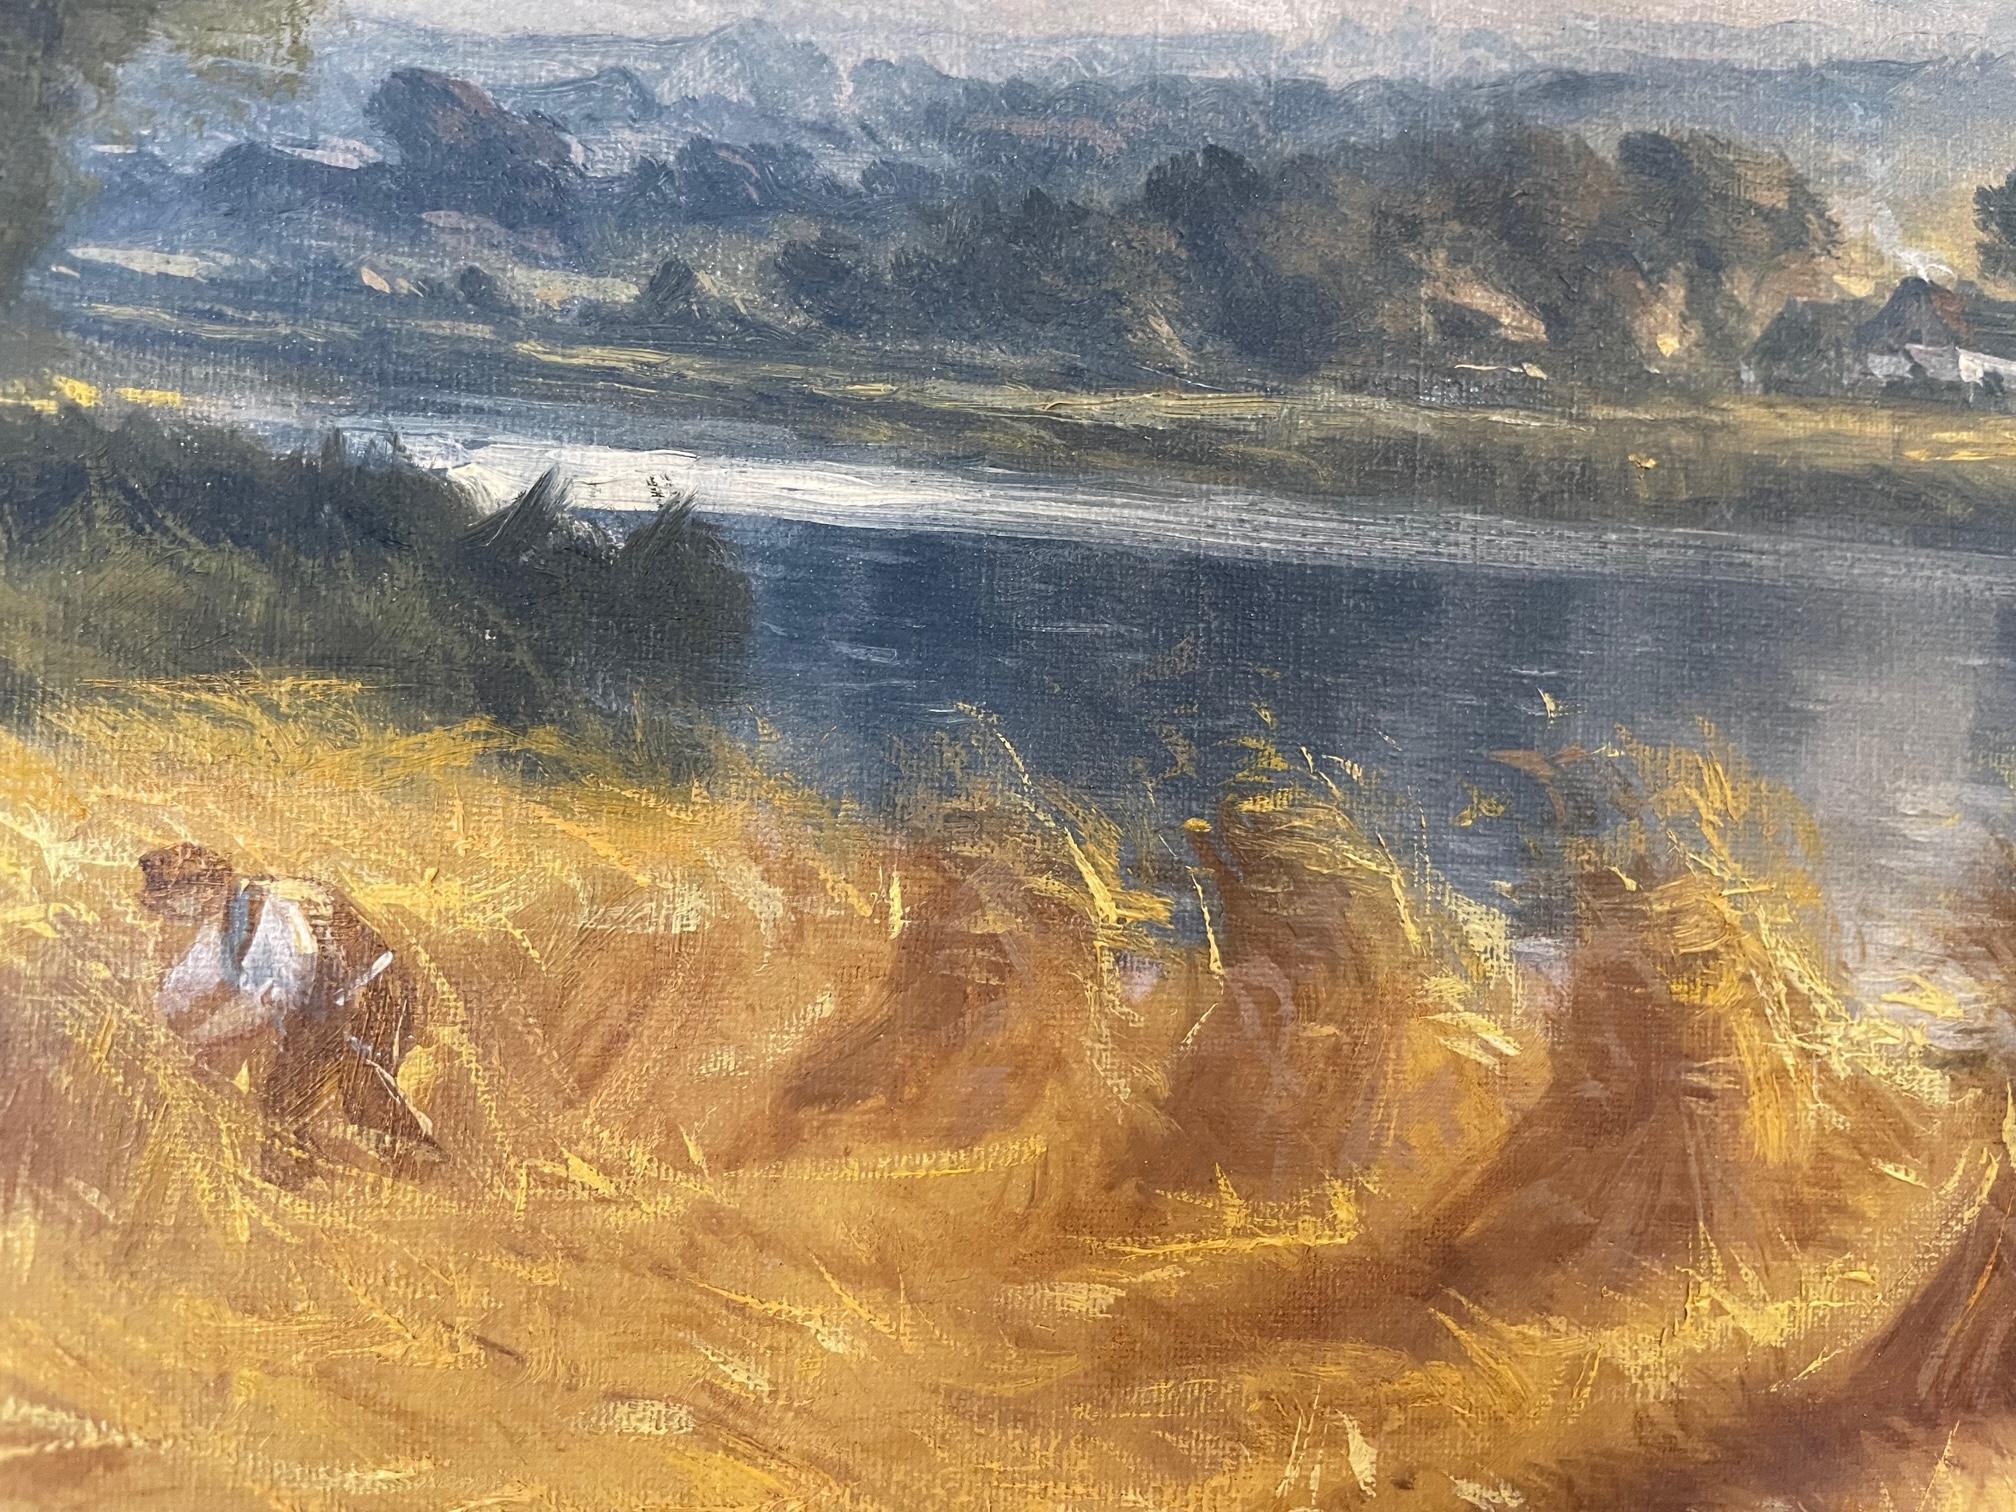 Thames Cornfield - Brown Landscape Painting by William Paton Burton